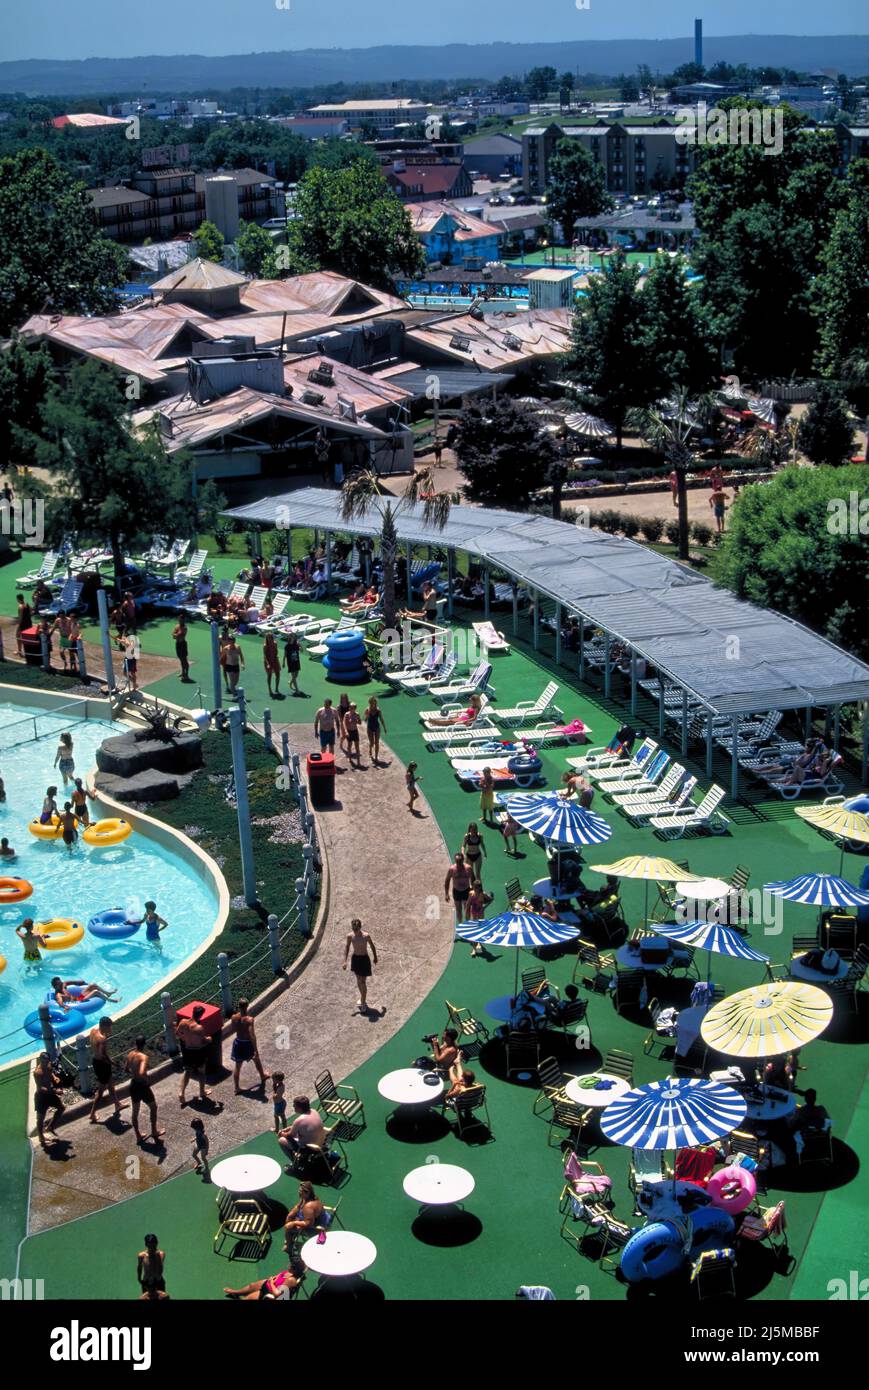 Branson, Missouri USA June 17, 1993: Whitewater Park in Branson, Missouri is a popular summer spot to cool off. Stock Photo